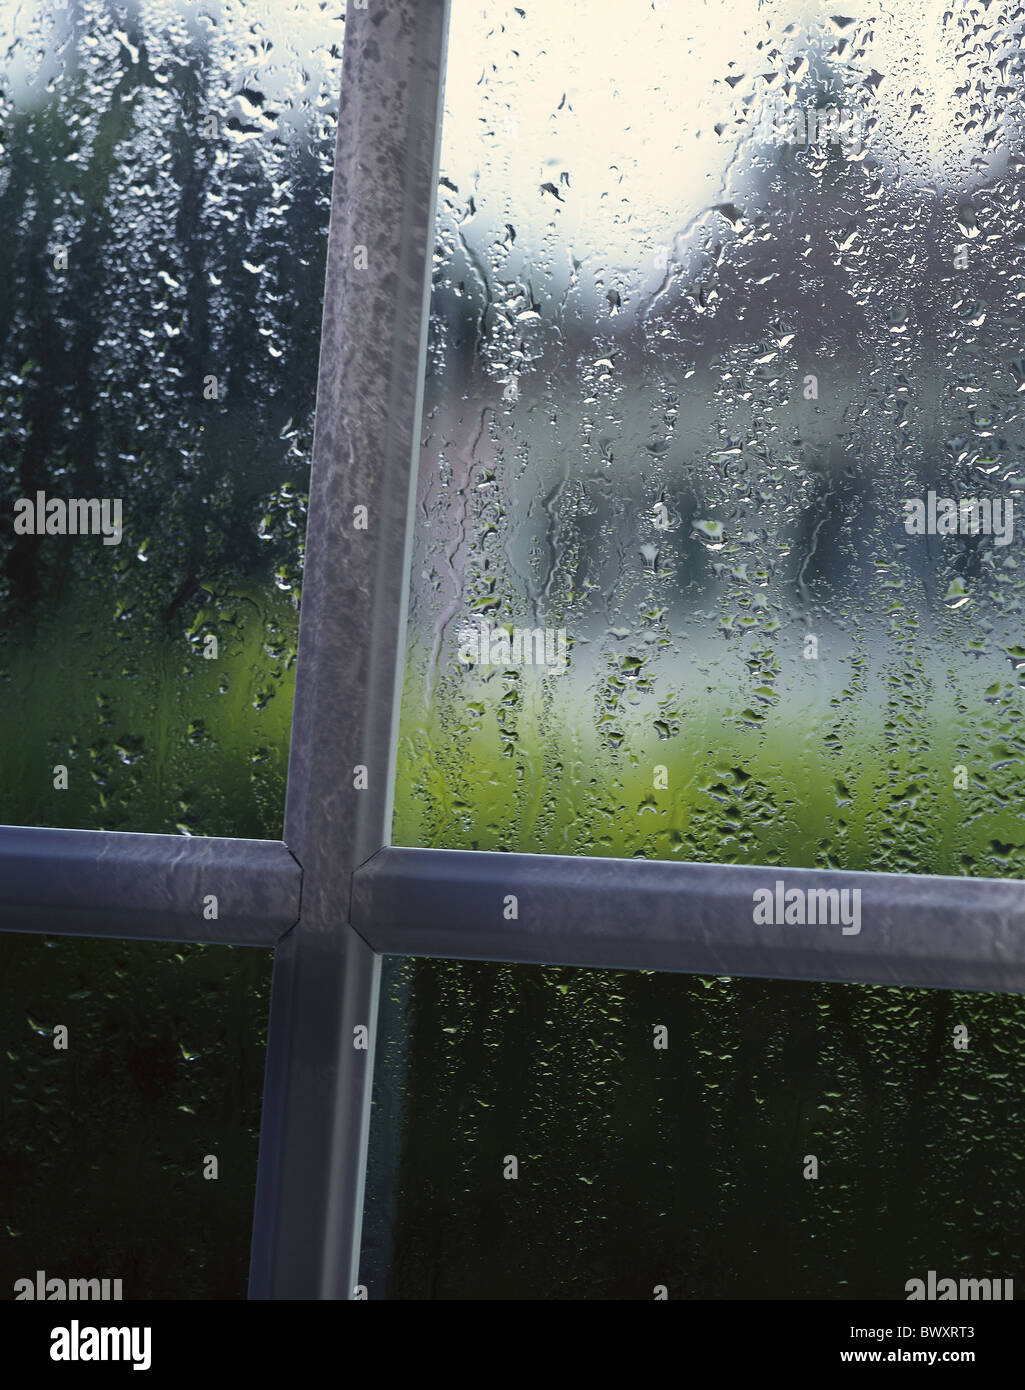 rains window pane drop of water drop disc slice window glass Stock Photo